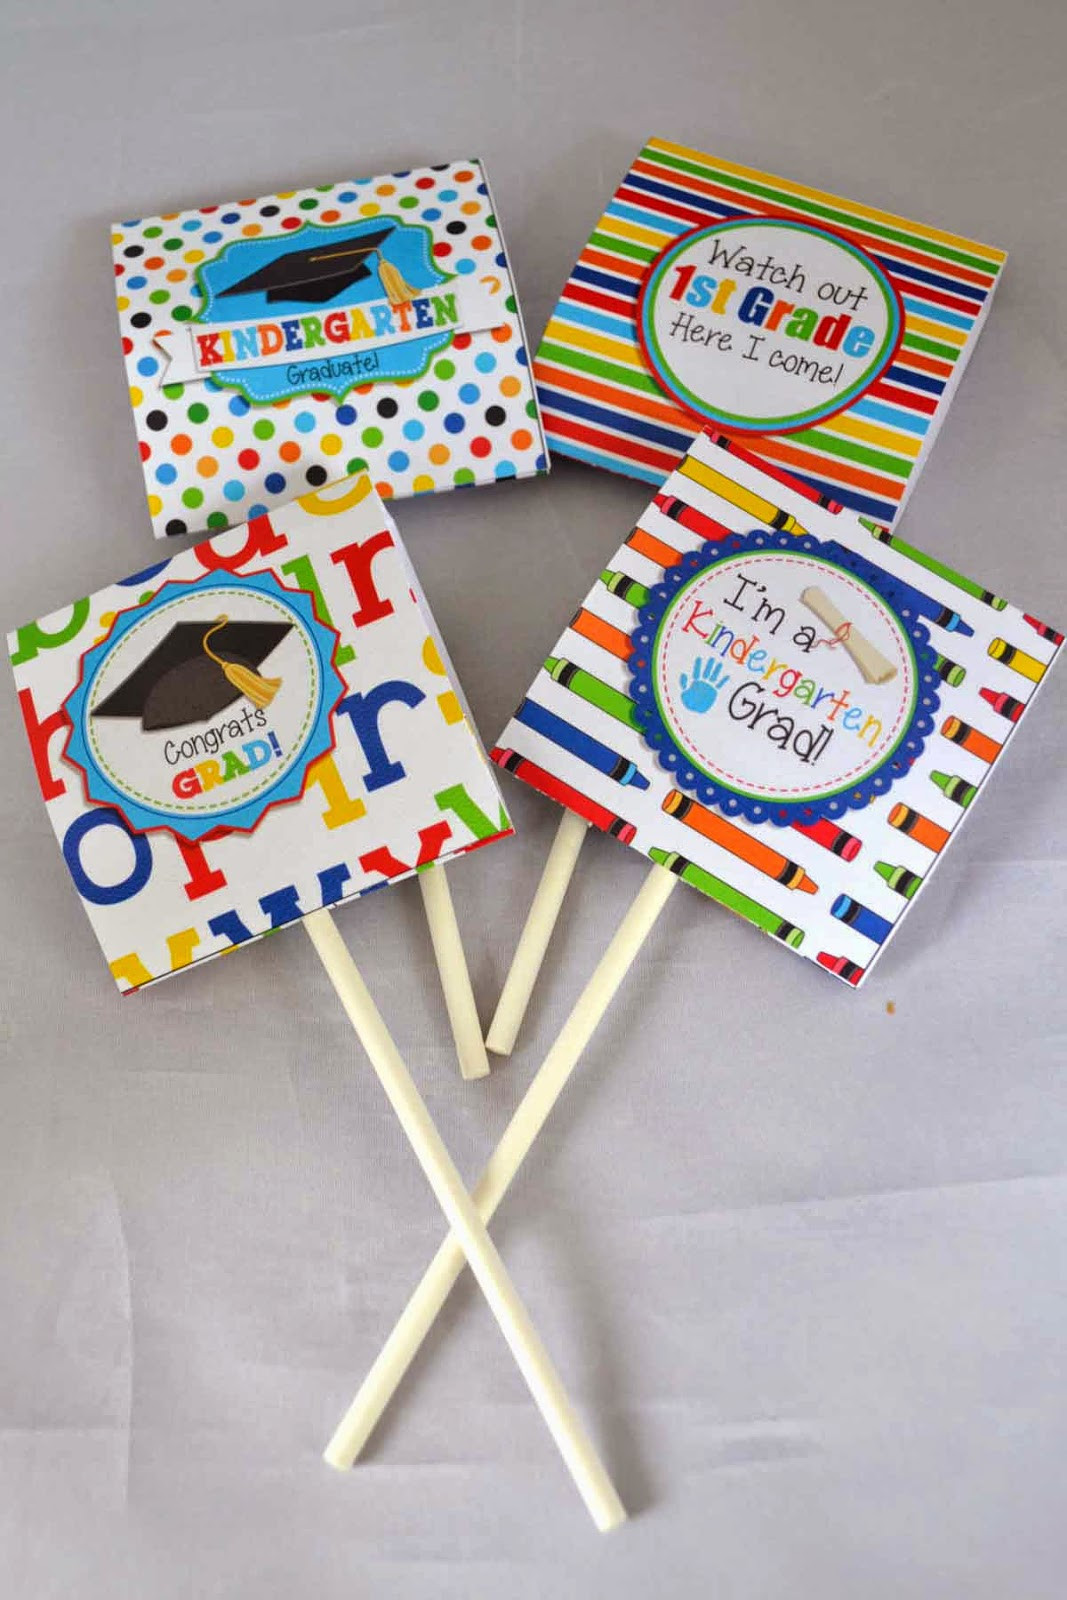 Preschool Graduation Gift Bag Ideas
 A Manda Creation Kindergarten Graduation Party Printables